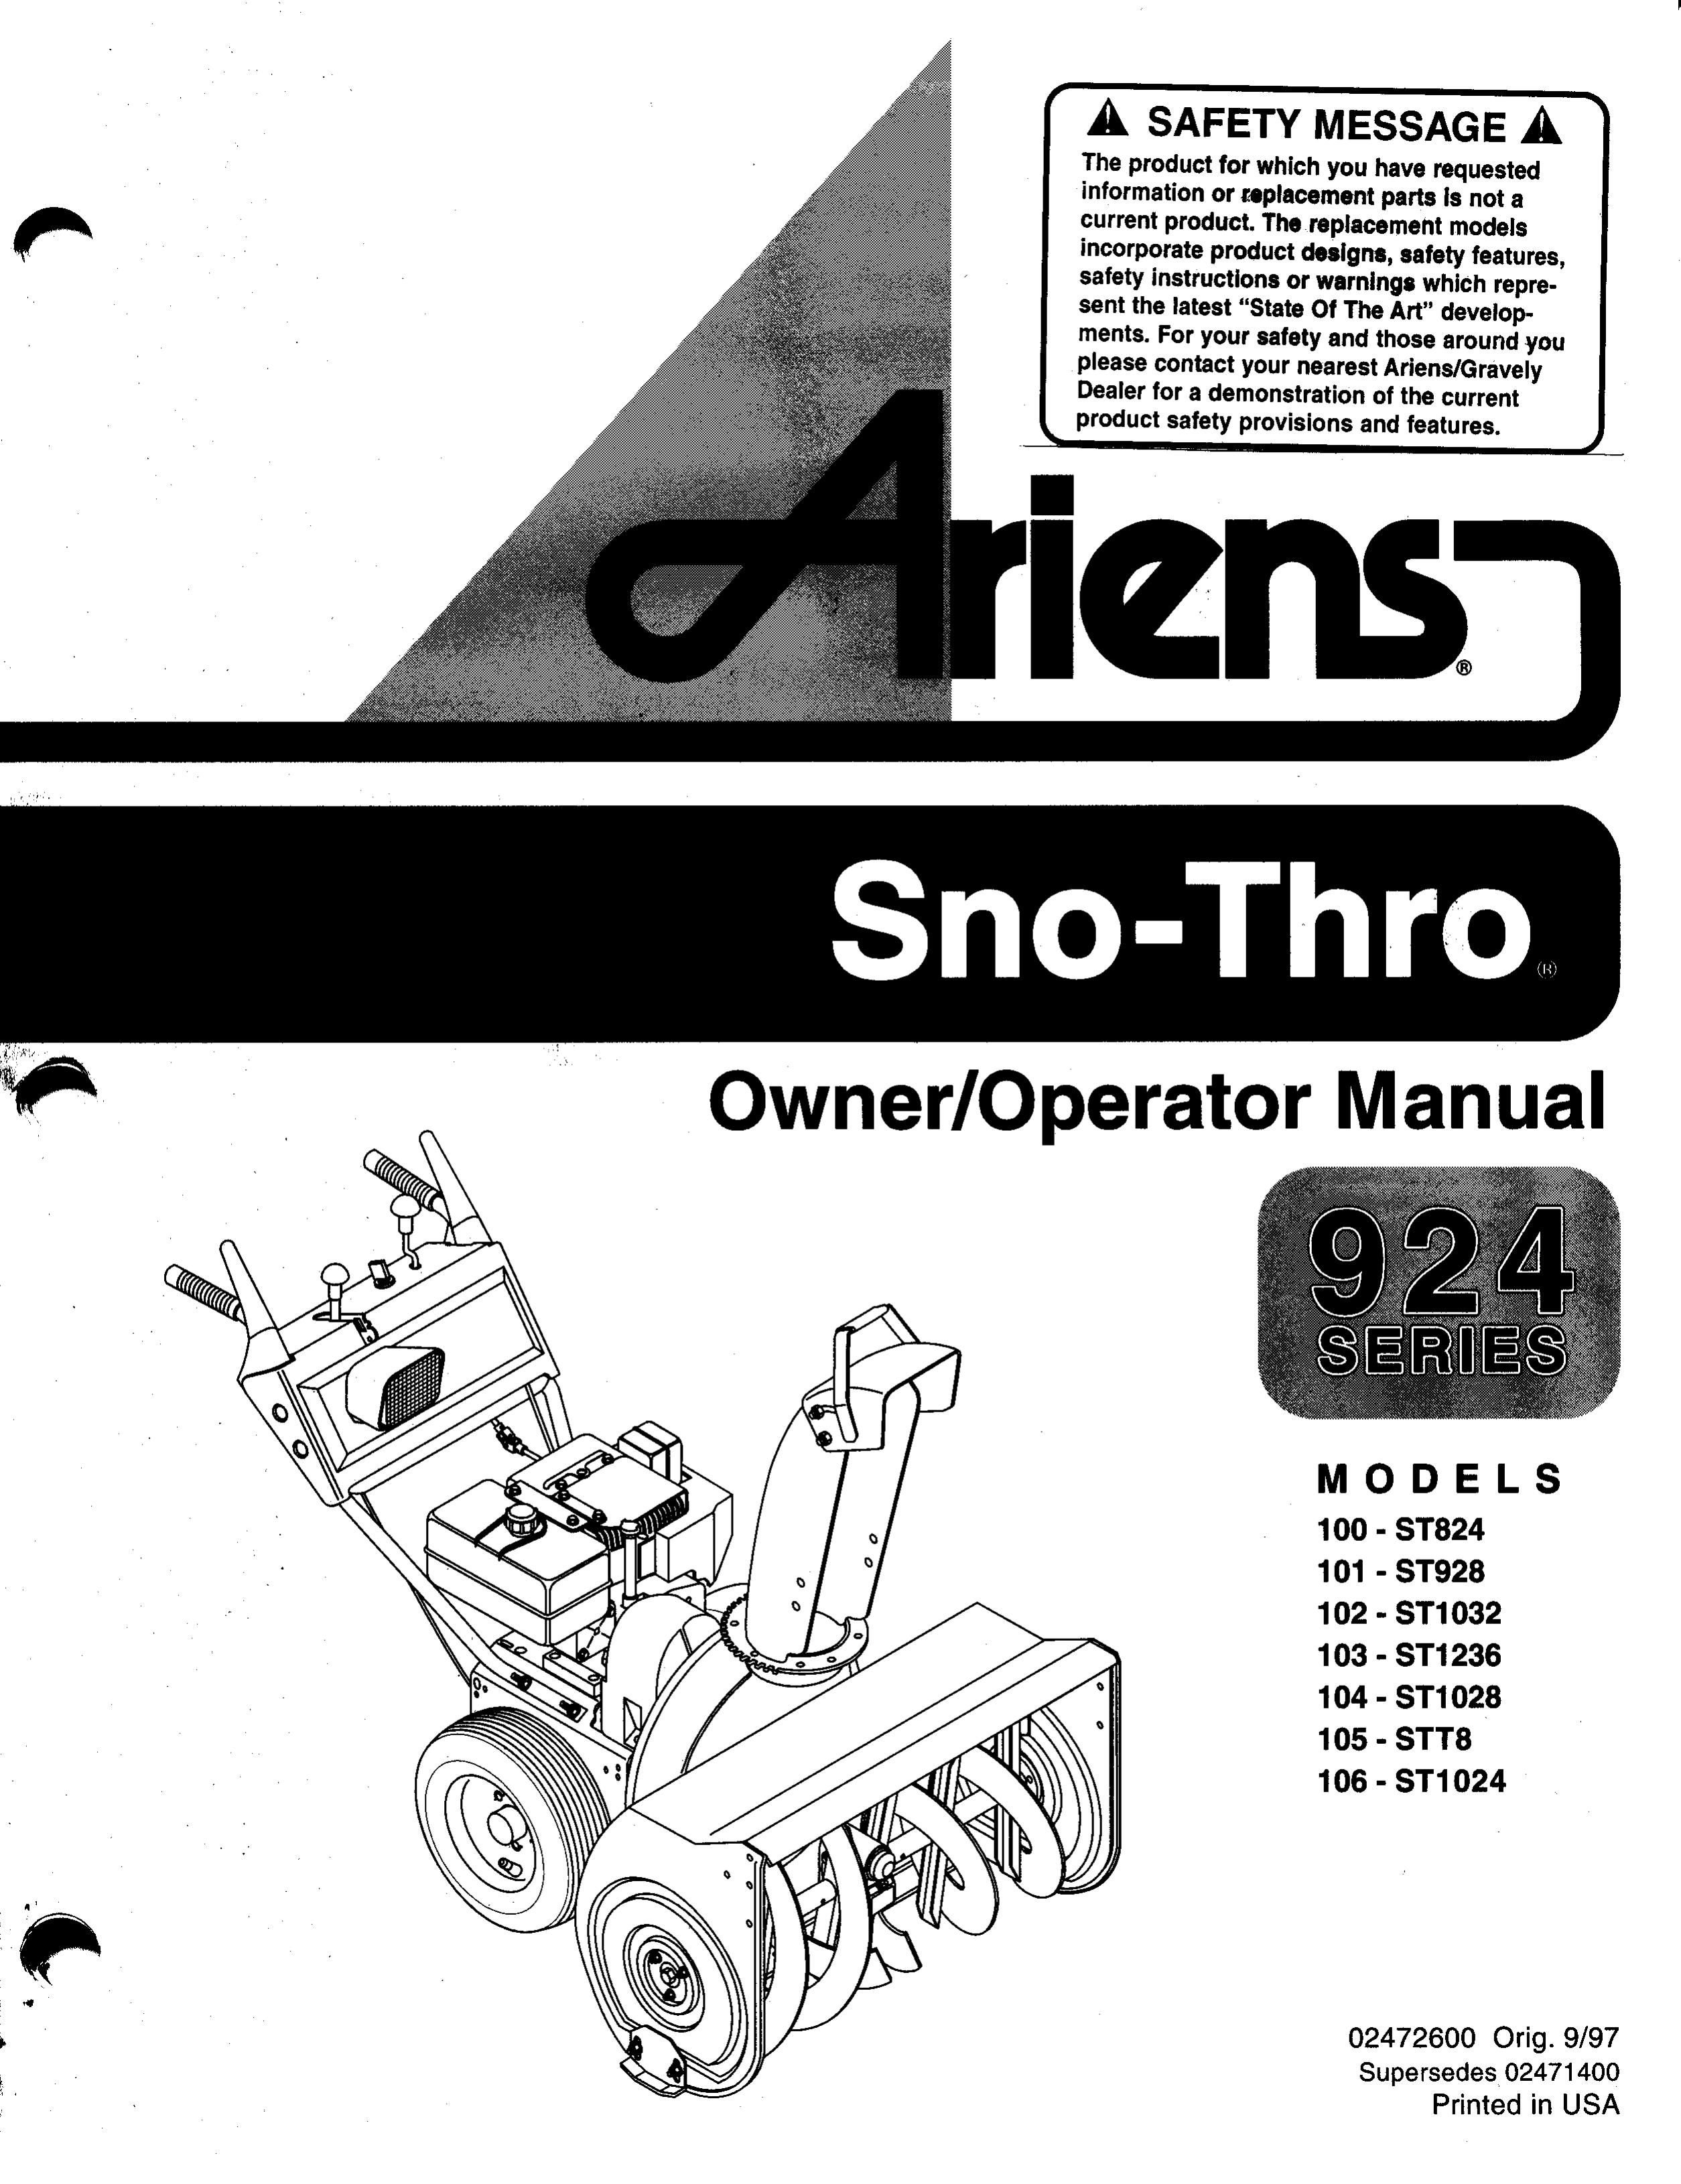 Ariens 103-ST1236 Snow Blower User Manual